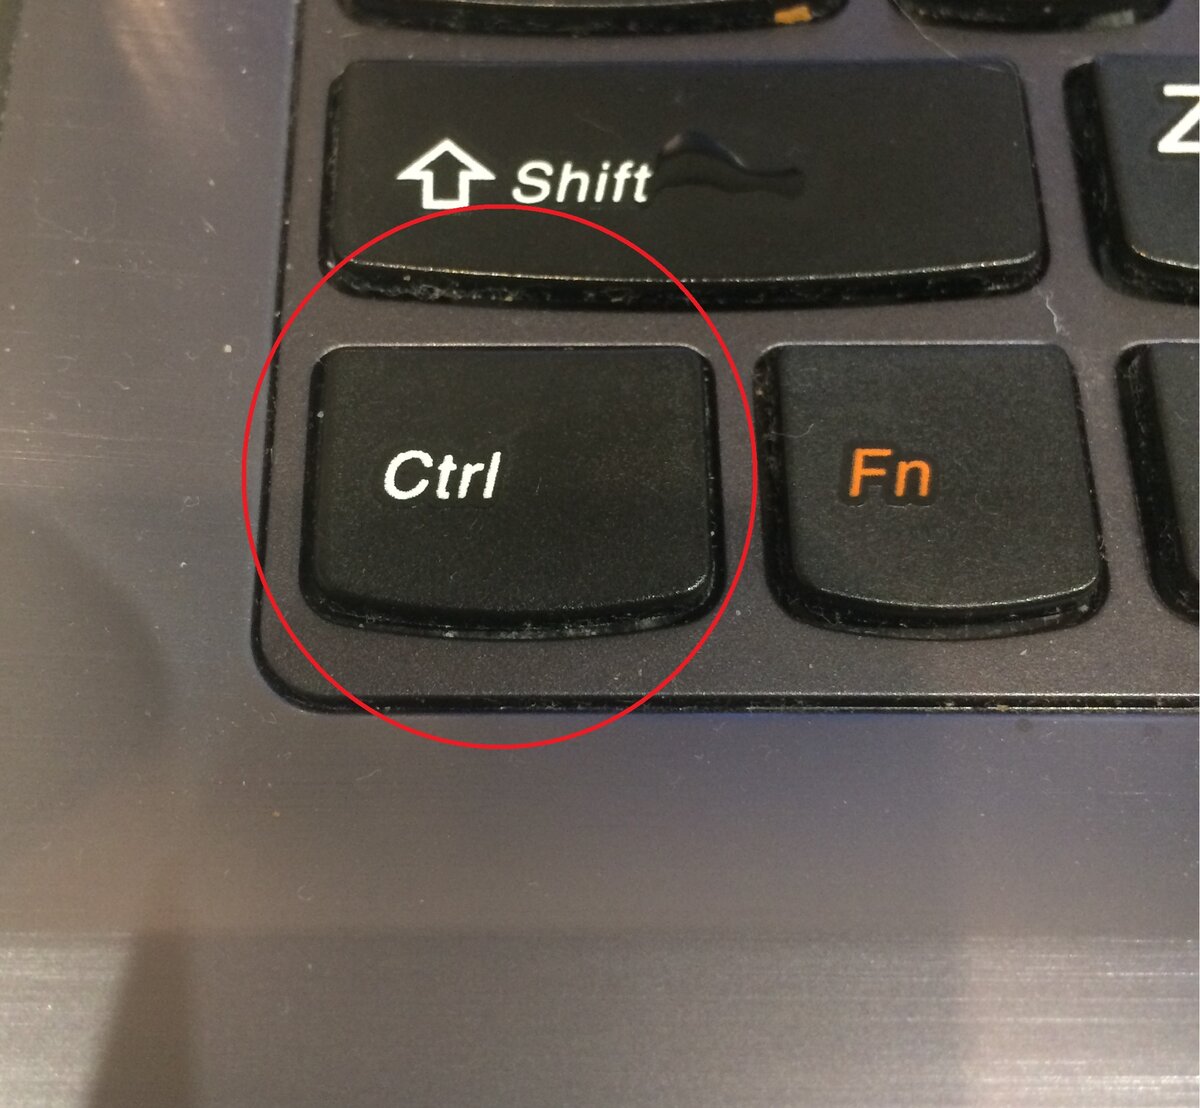 Кнопка клавиша. Кнопка FN+f8. Клавиша контрол шифт. Клавиша контрол на клавиатуре. Кнопка Ctrl на клавиатуре.